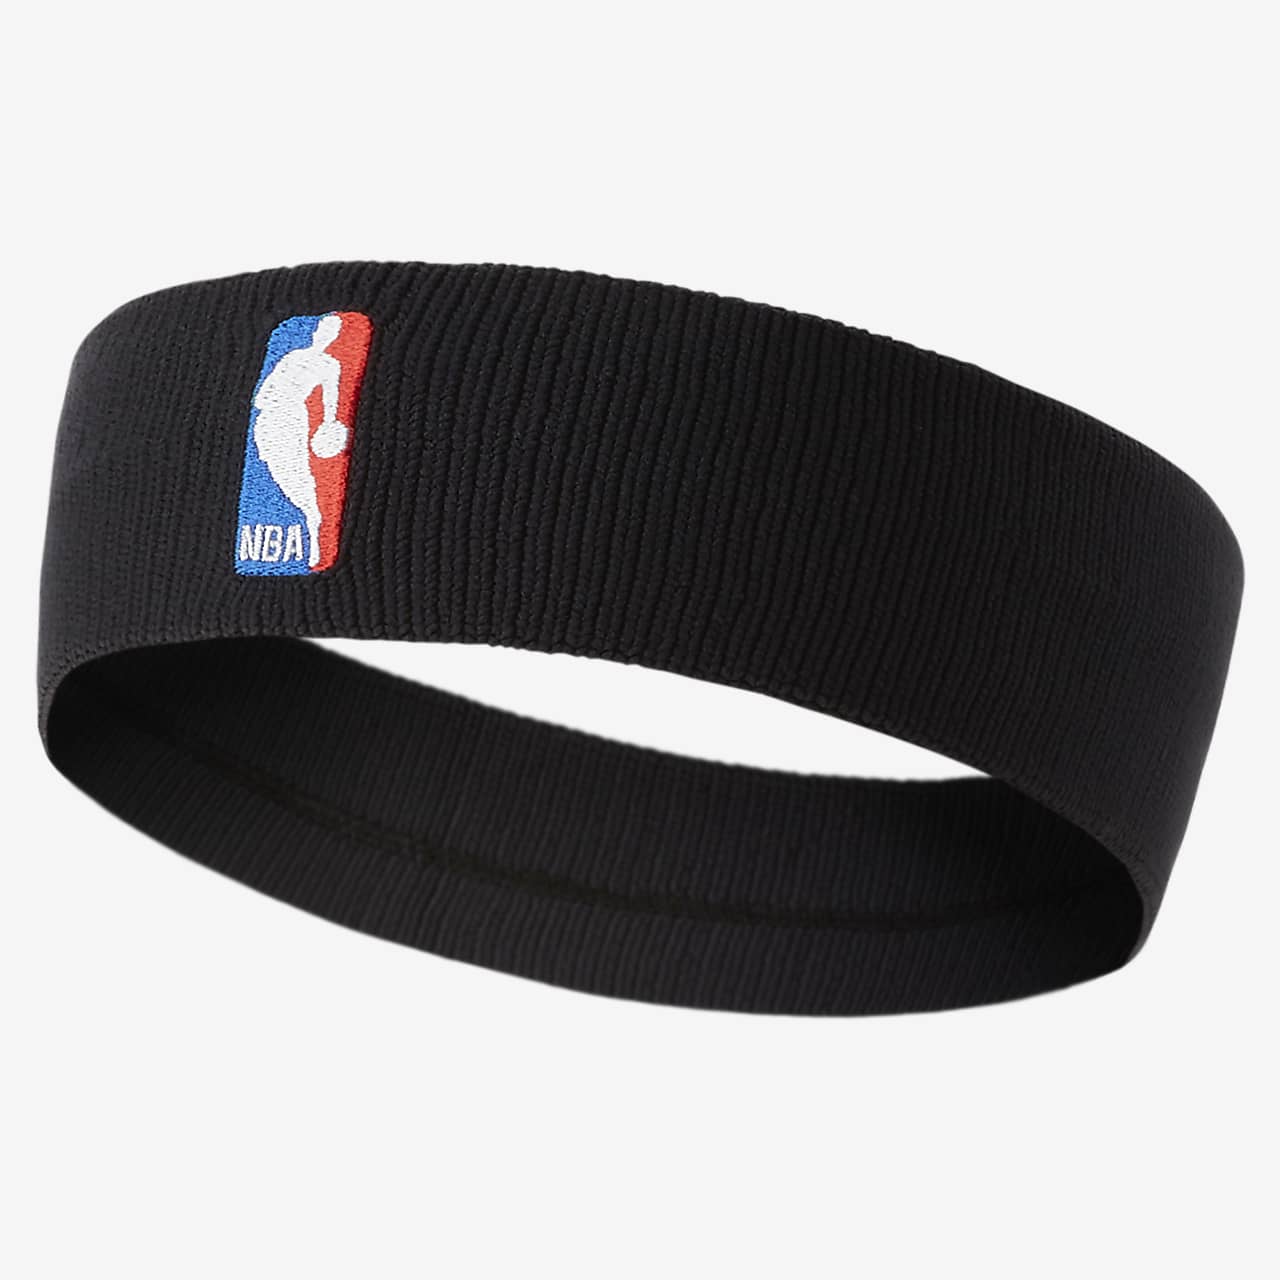 Nike Black NBA Headband